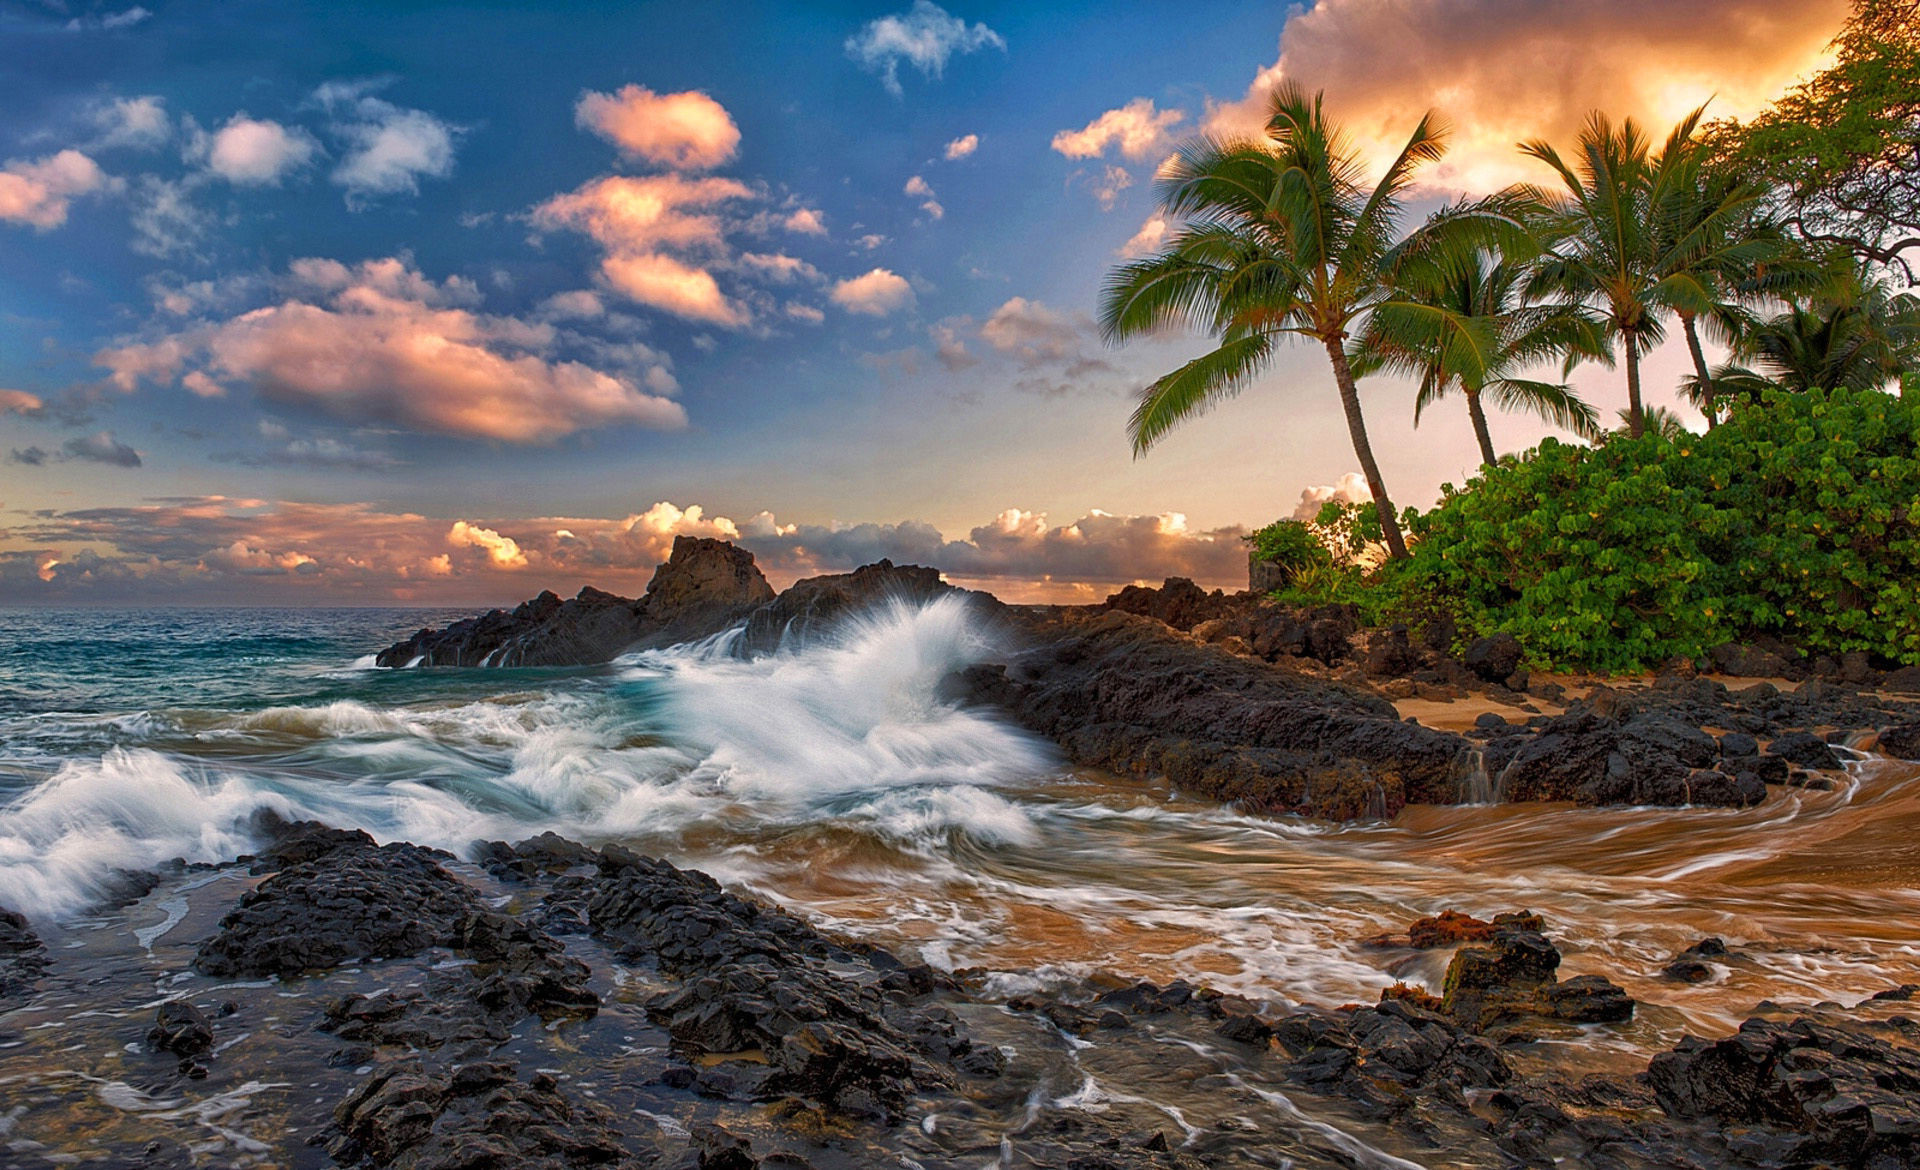 Maui Hawaii Desktop Wallpaper (47+ images)